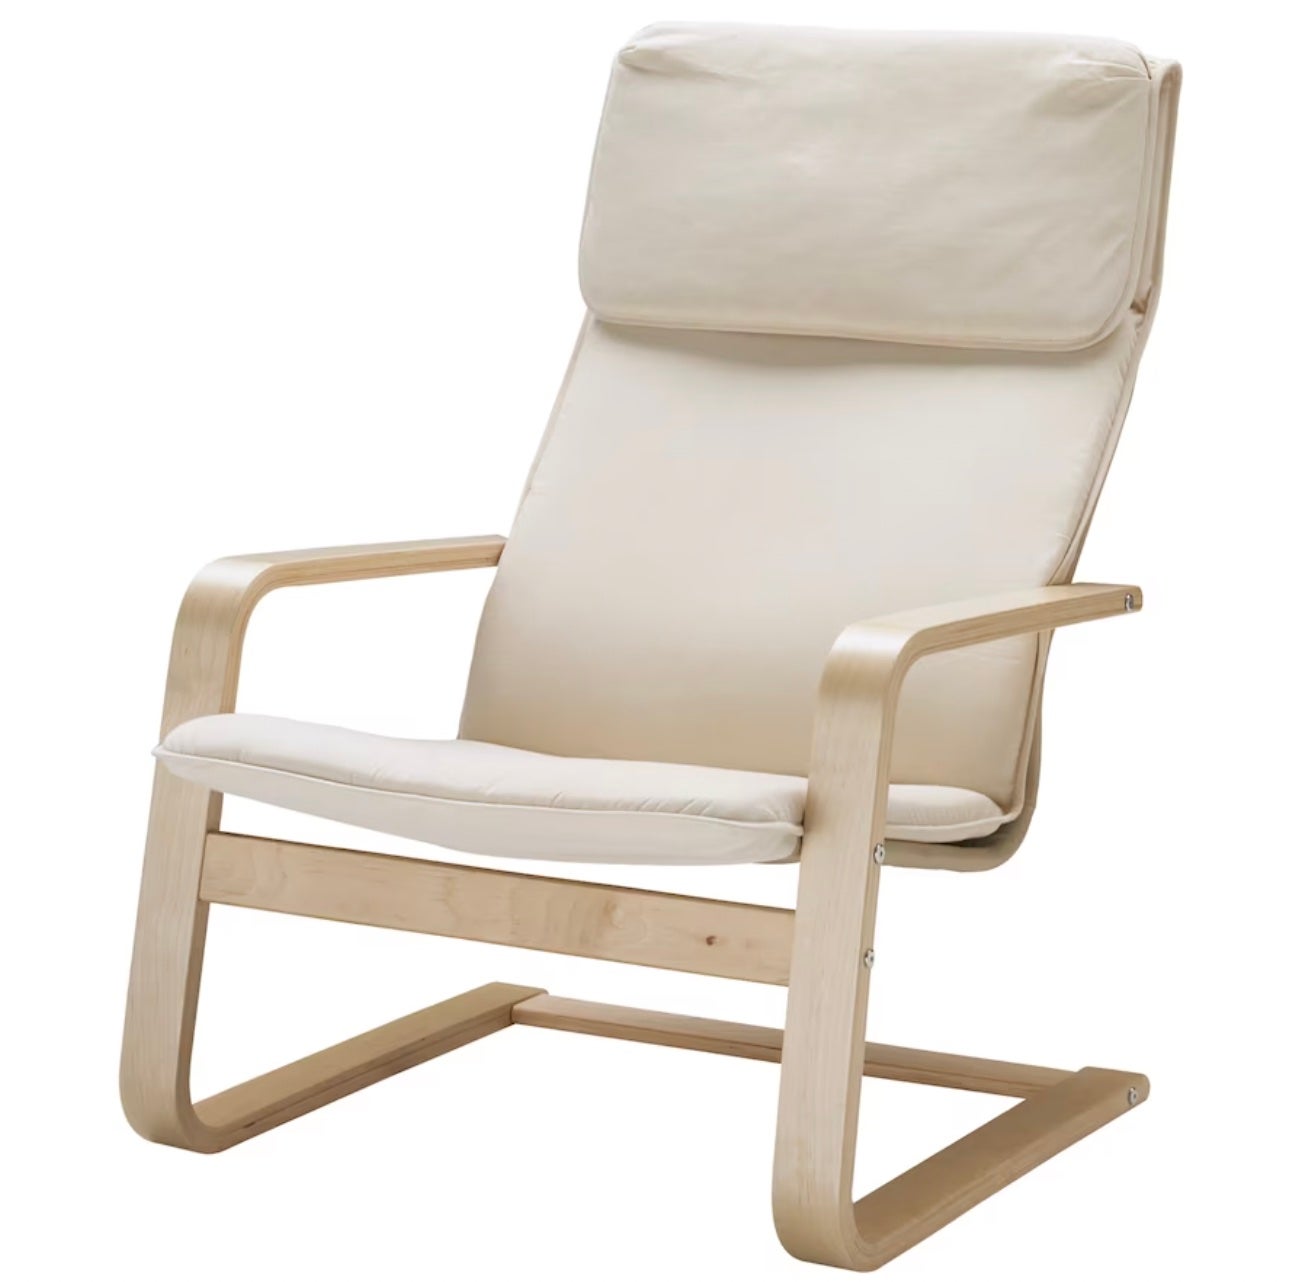 IKEA arm chair